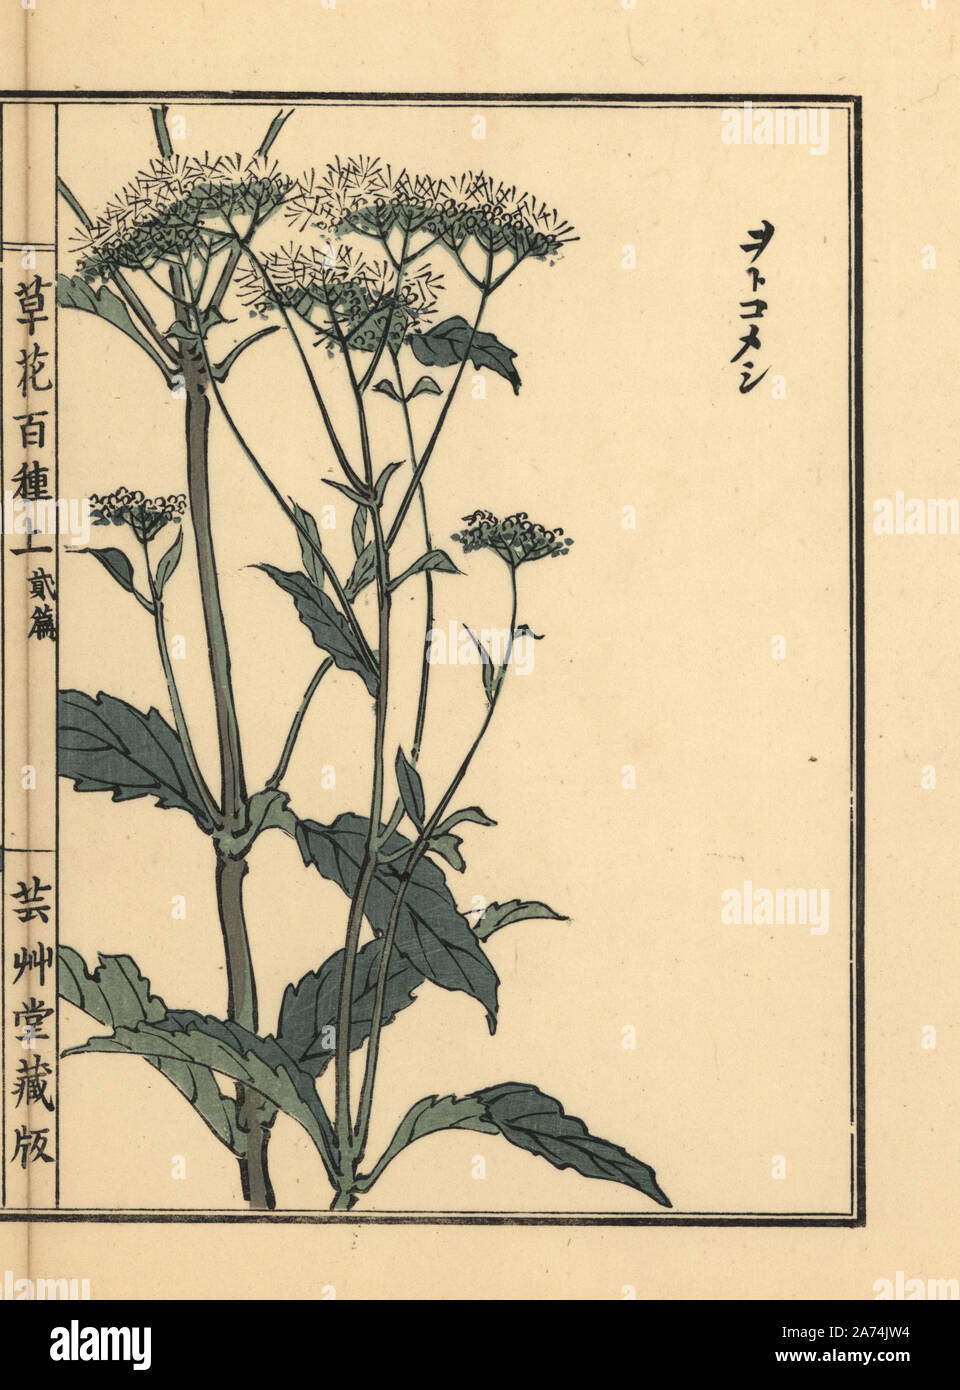 Otokoeshi or Bai Jiang Cao, Patrinia villosa. Handcoloured woodblock print by Kono Bairei from Kusa Bana Hyakushu (One Hundred Varieties of Flowers), Tokyo, Yamada, 1901. Stock Photo